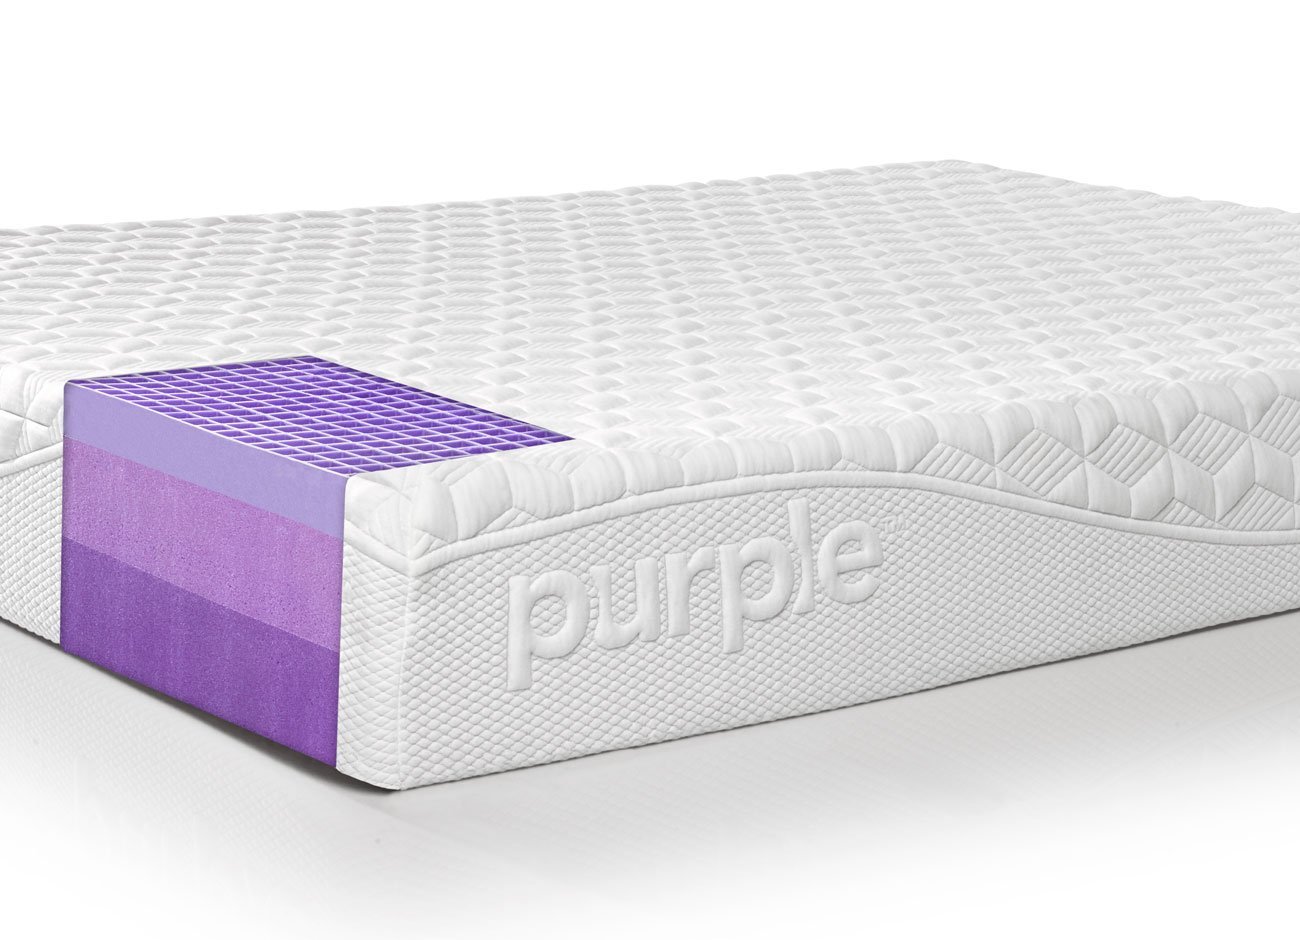 anywhere to try purple mattress